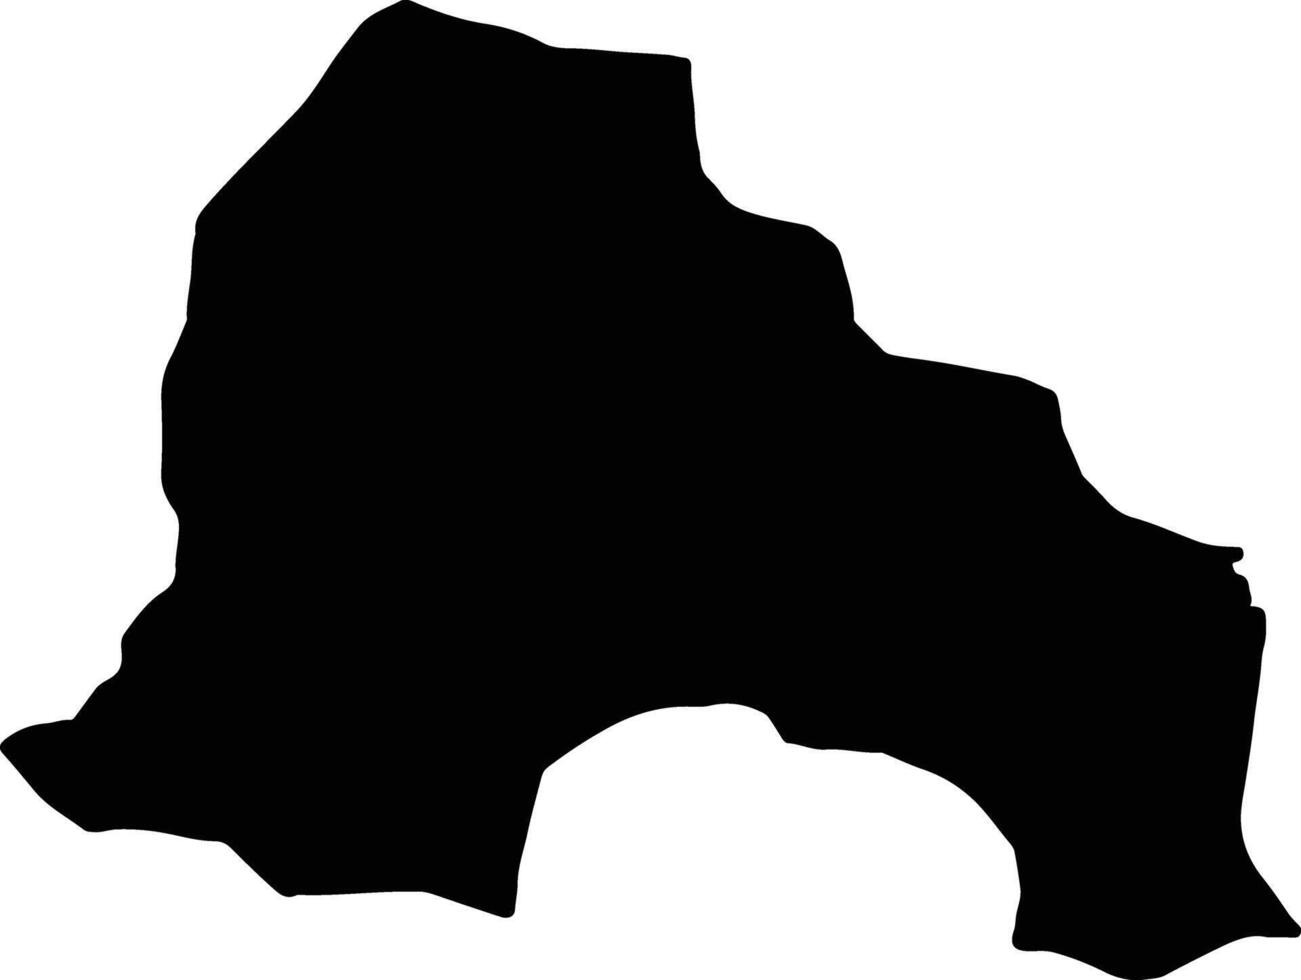 Kankan Guinea silhouette map vector